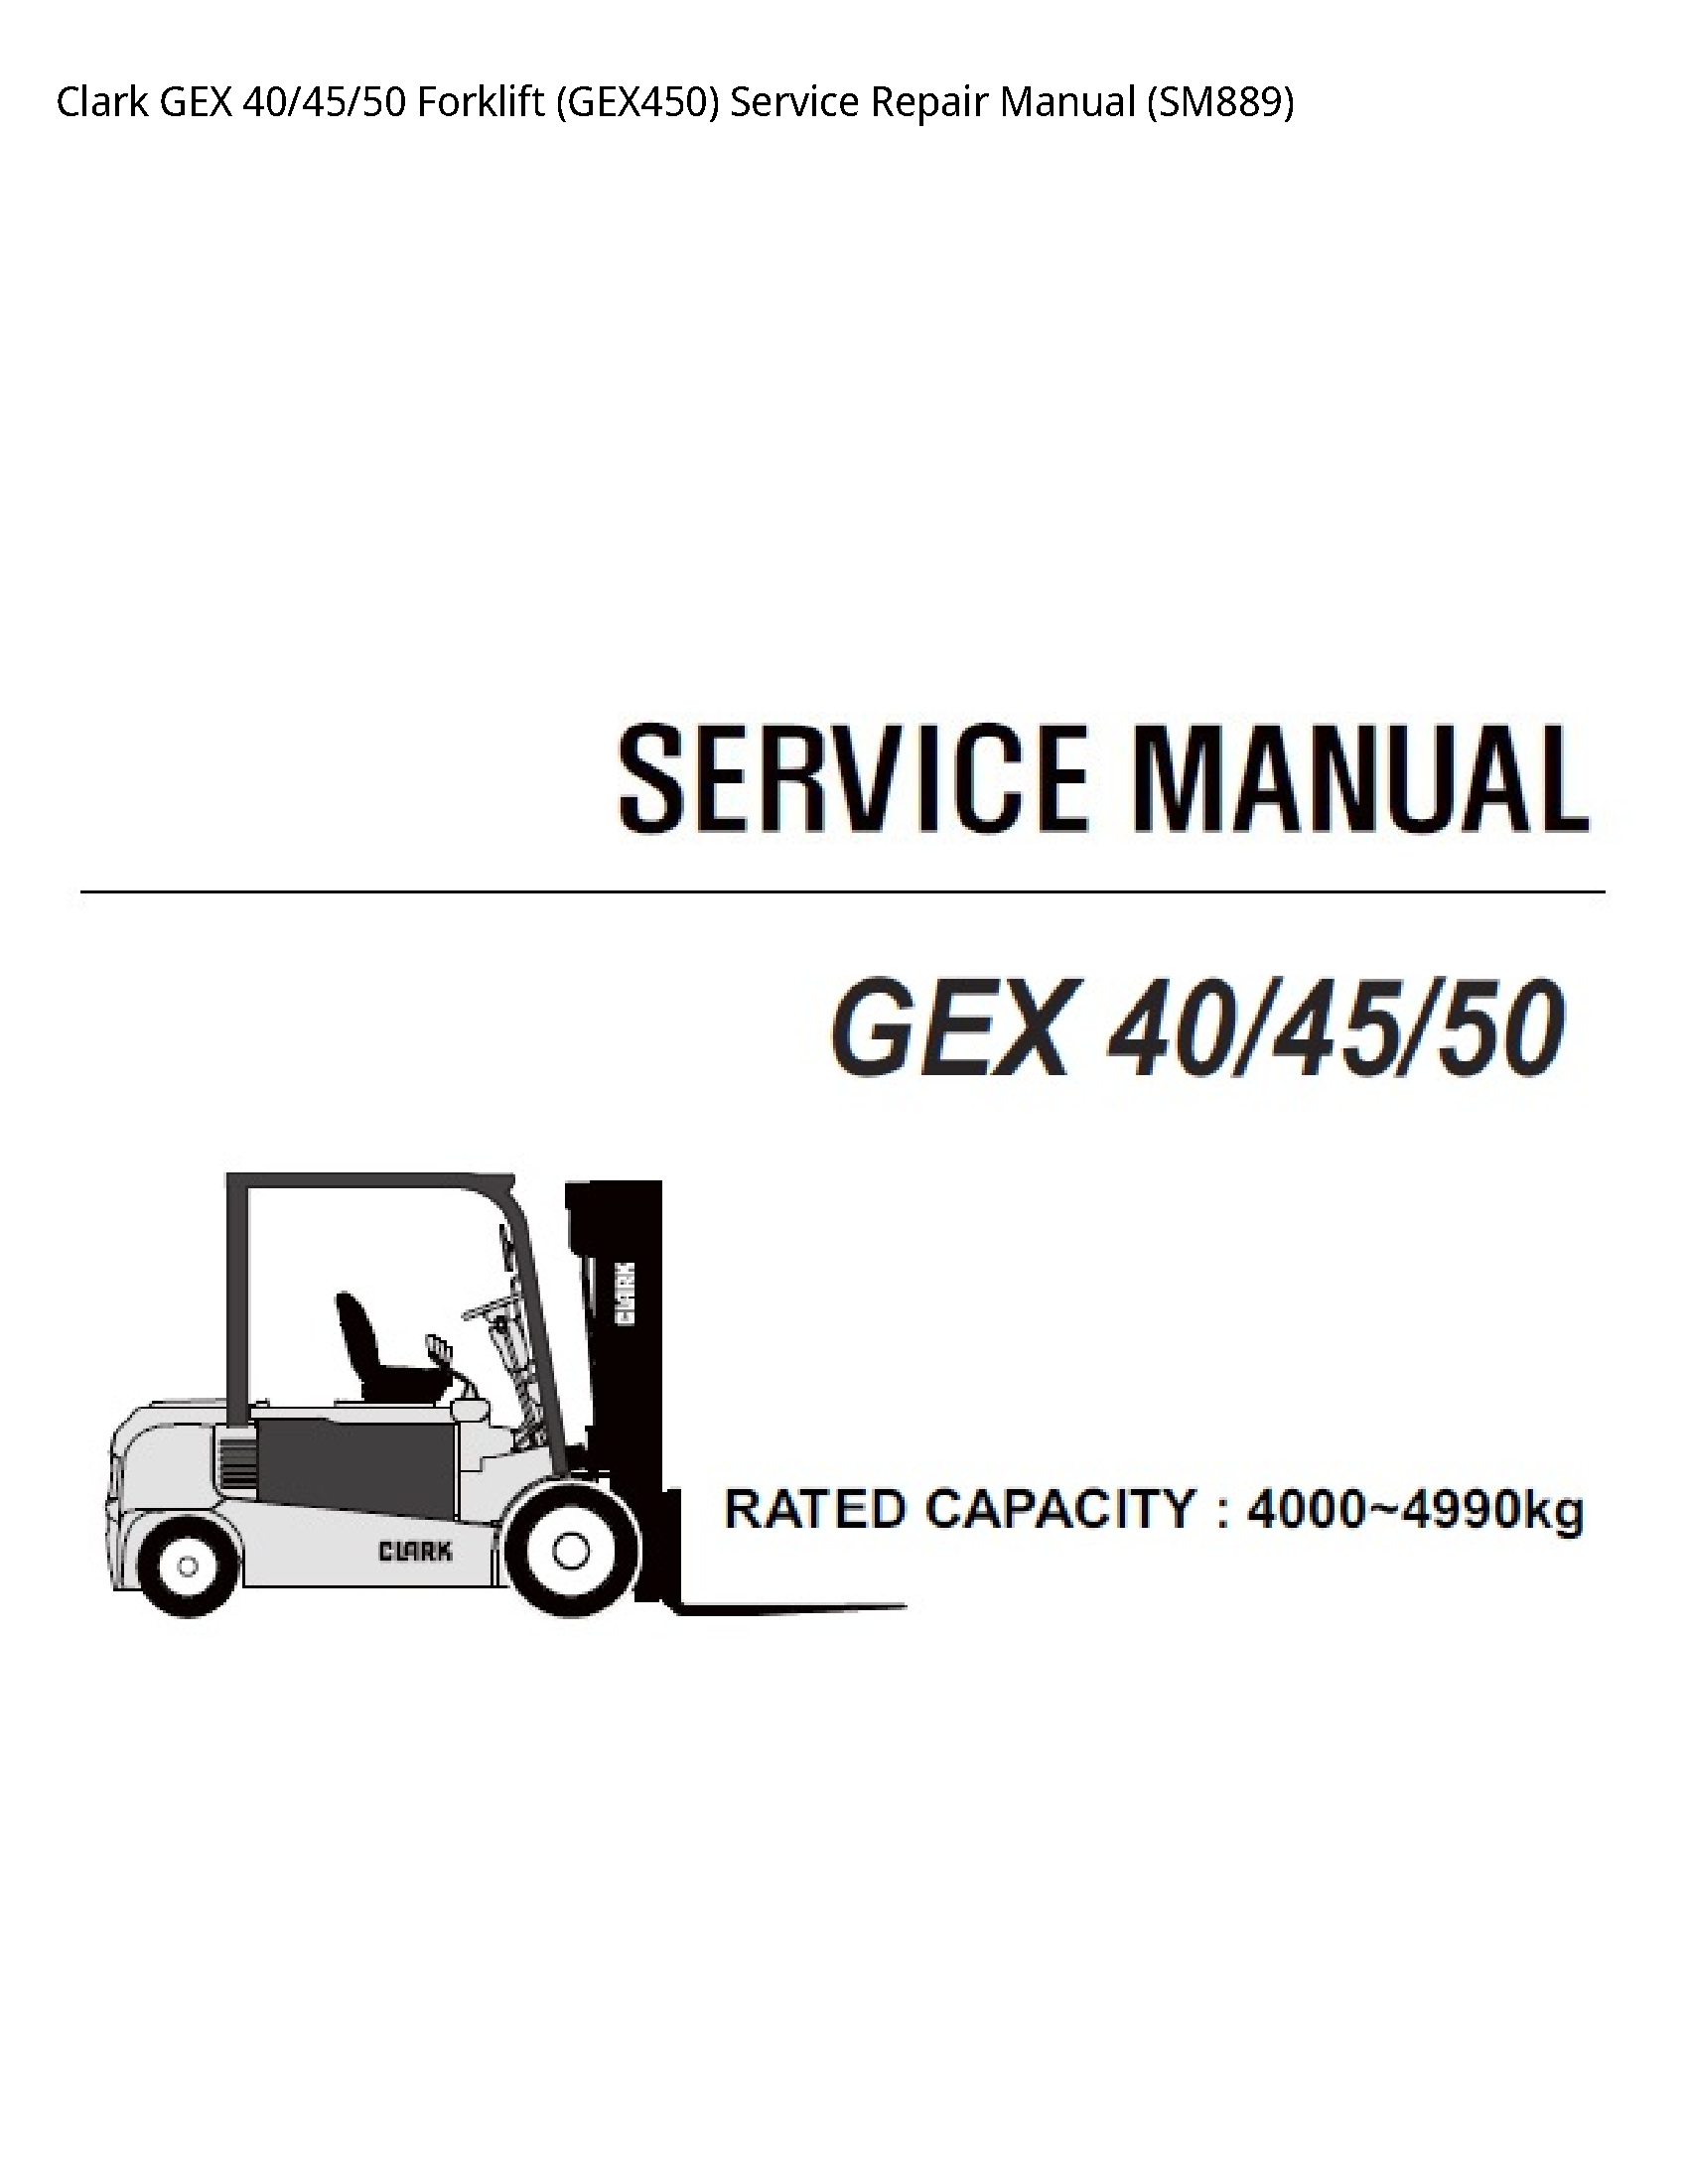 Clark 40 GEX Forklift manual